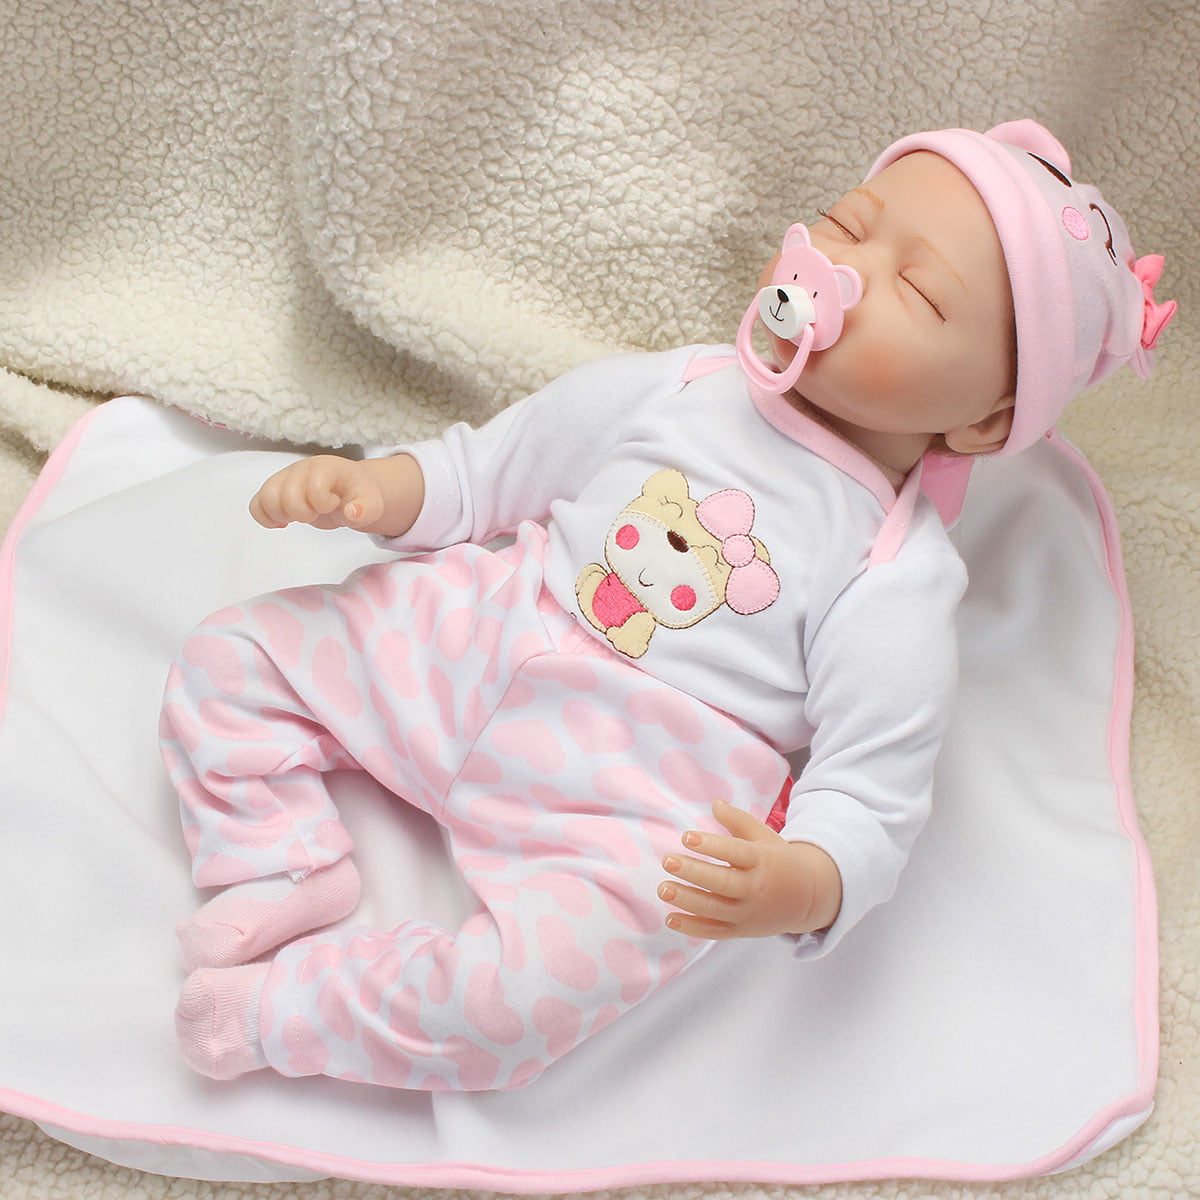 22" Reborn Baby Doll Silicone Vinyl Handmade Lifelike Baby Sleeping ...